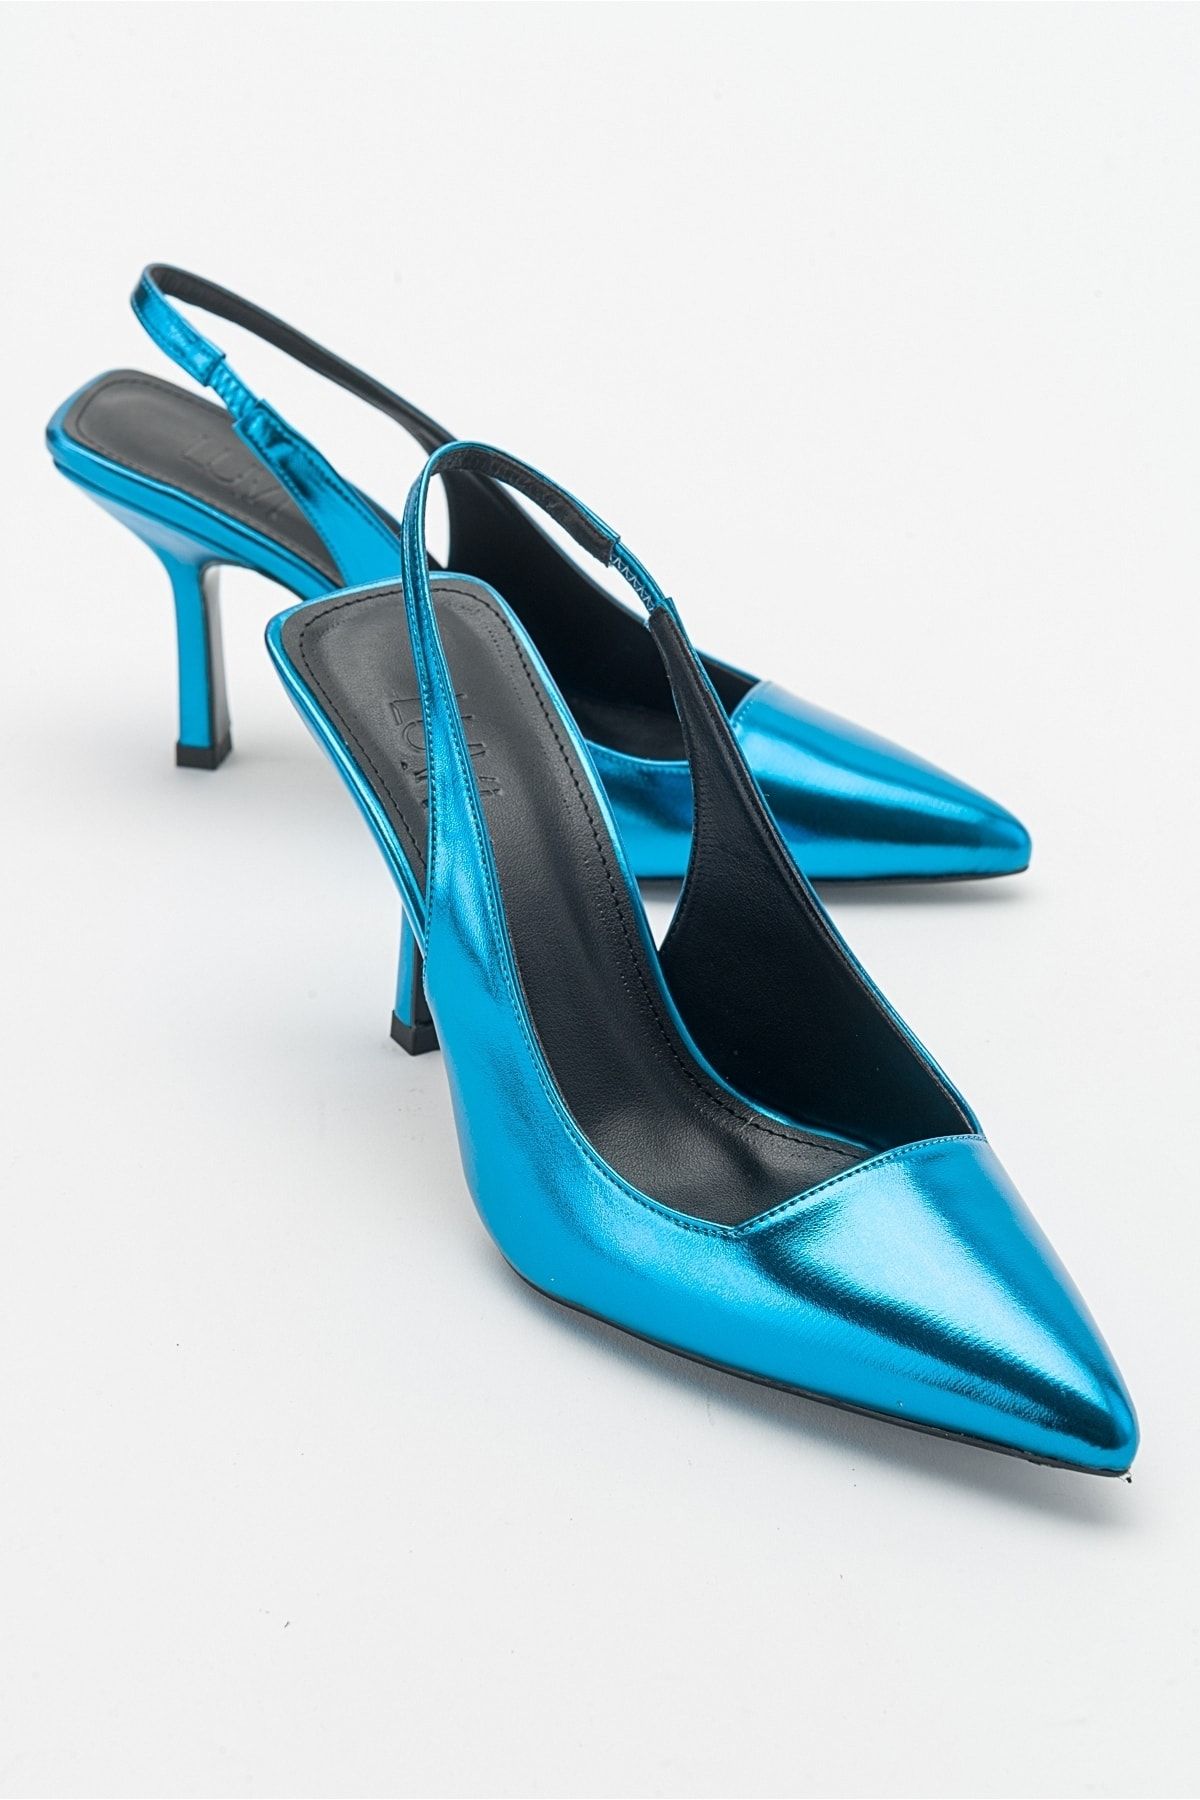 luvishoes Ferry Mavi Metalik Kadın Topuklu Ayakkabı